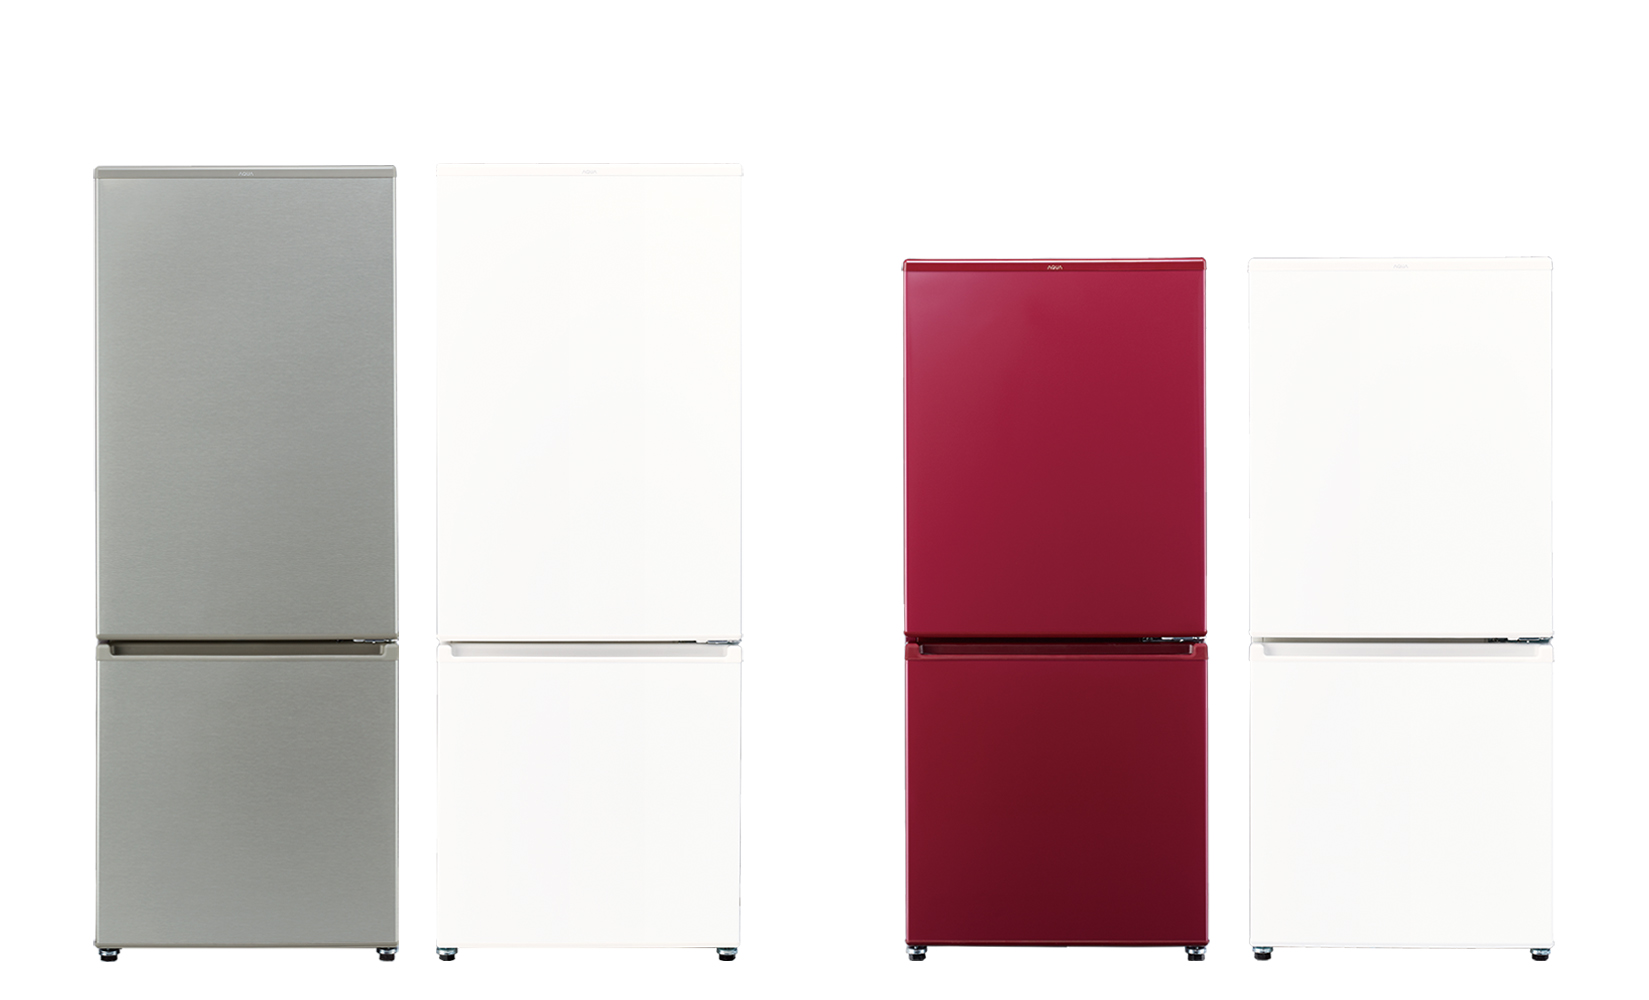 ａｑｕａ コンパクト大容量の2ドア冷凍冷蔵庫発売 アクア株式会社のプレスリリース